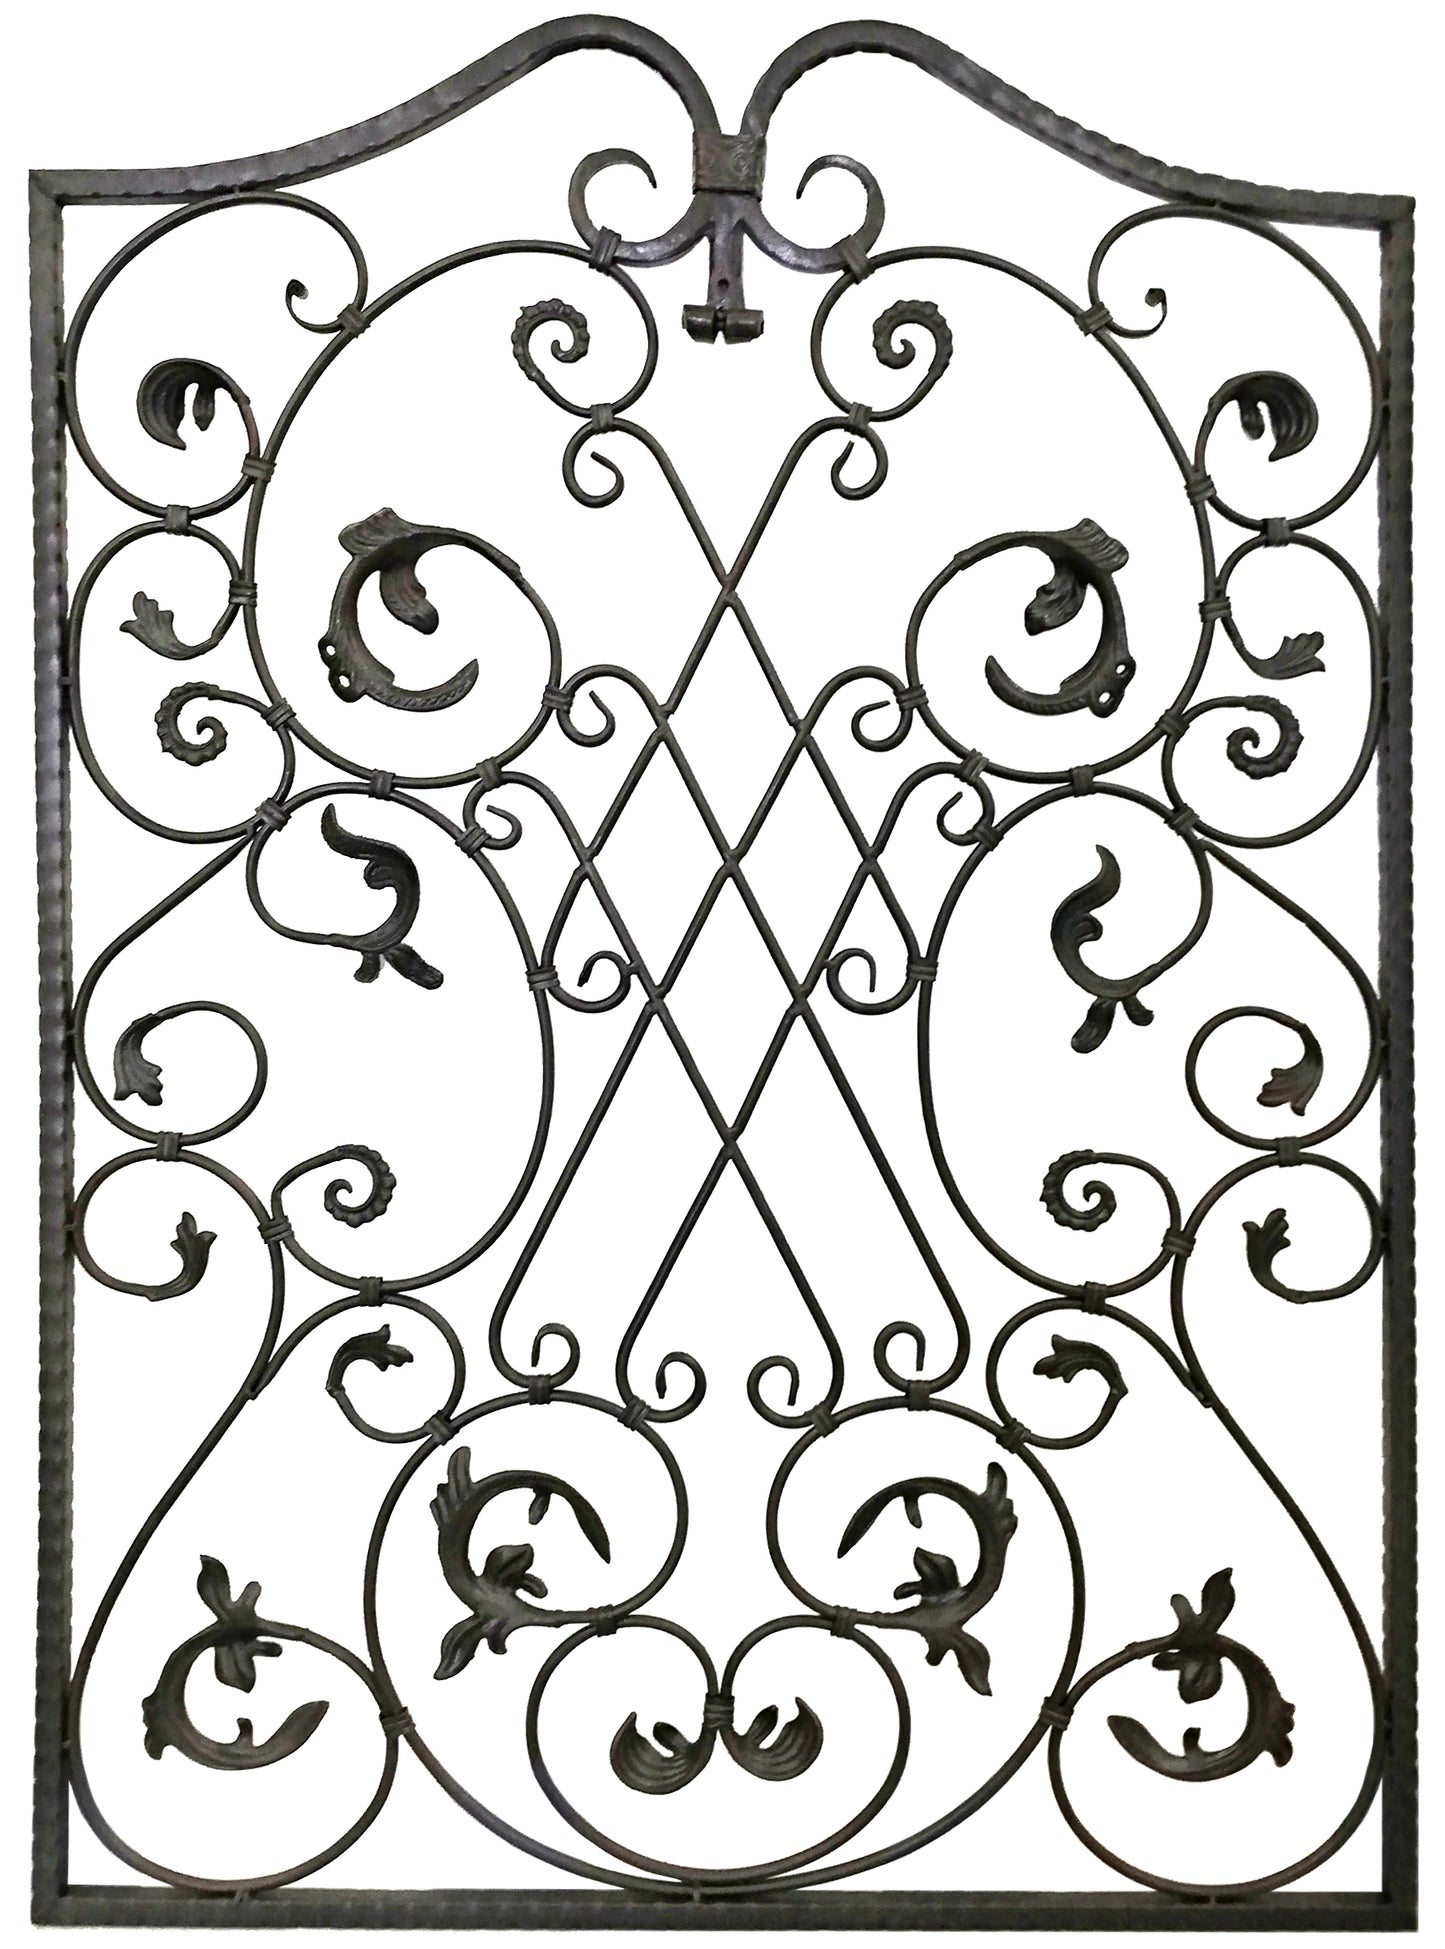 Decorative Ornamental Panel Fence 56" x 40" Wrought Iron Metal Outdoor (70038) - SHEMONICO